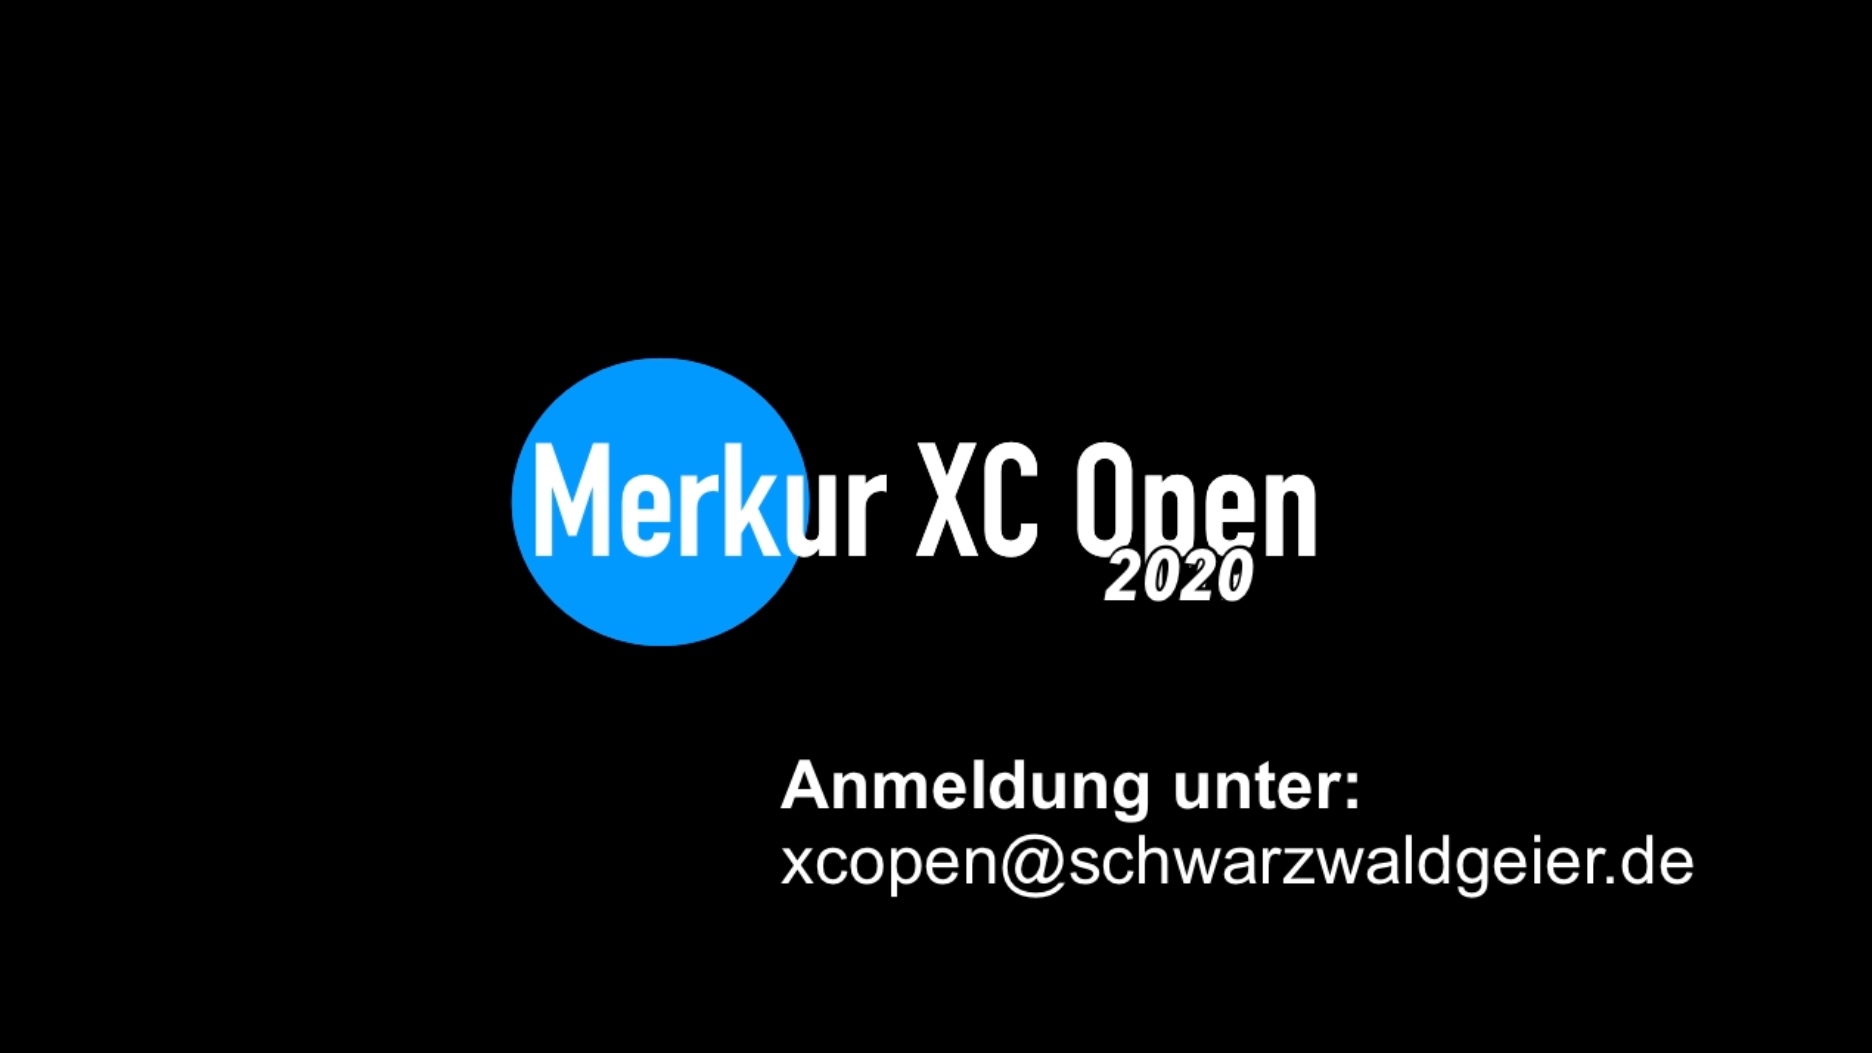 Merkur XC Open